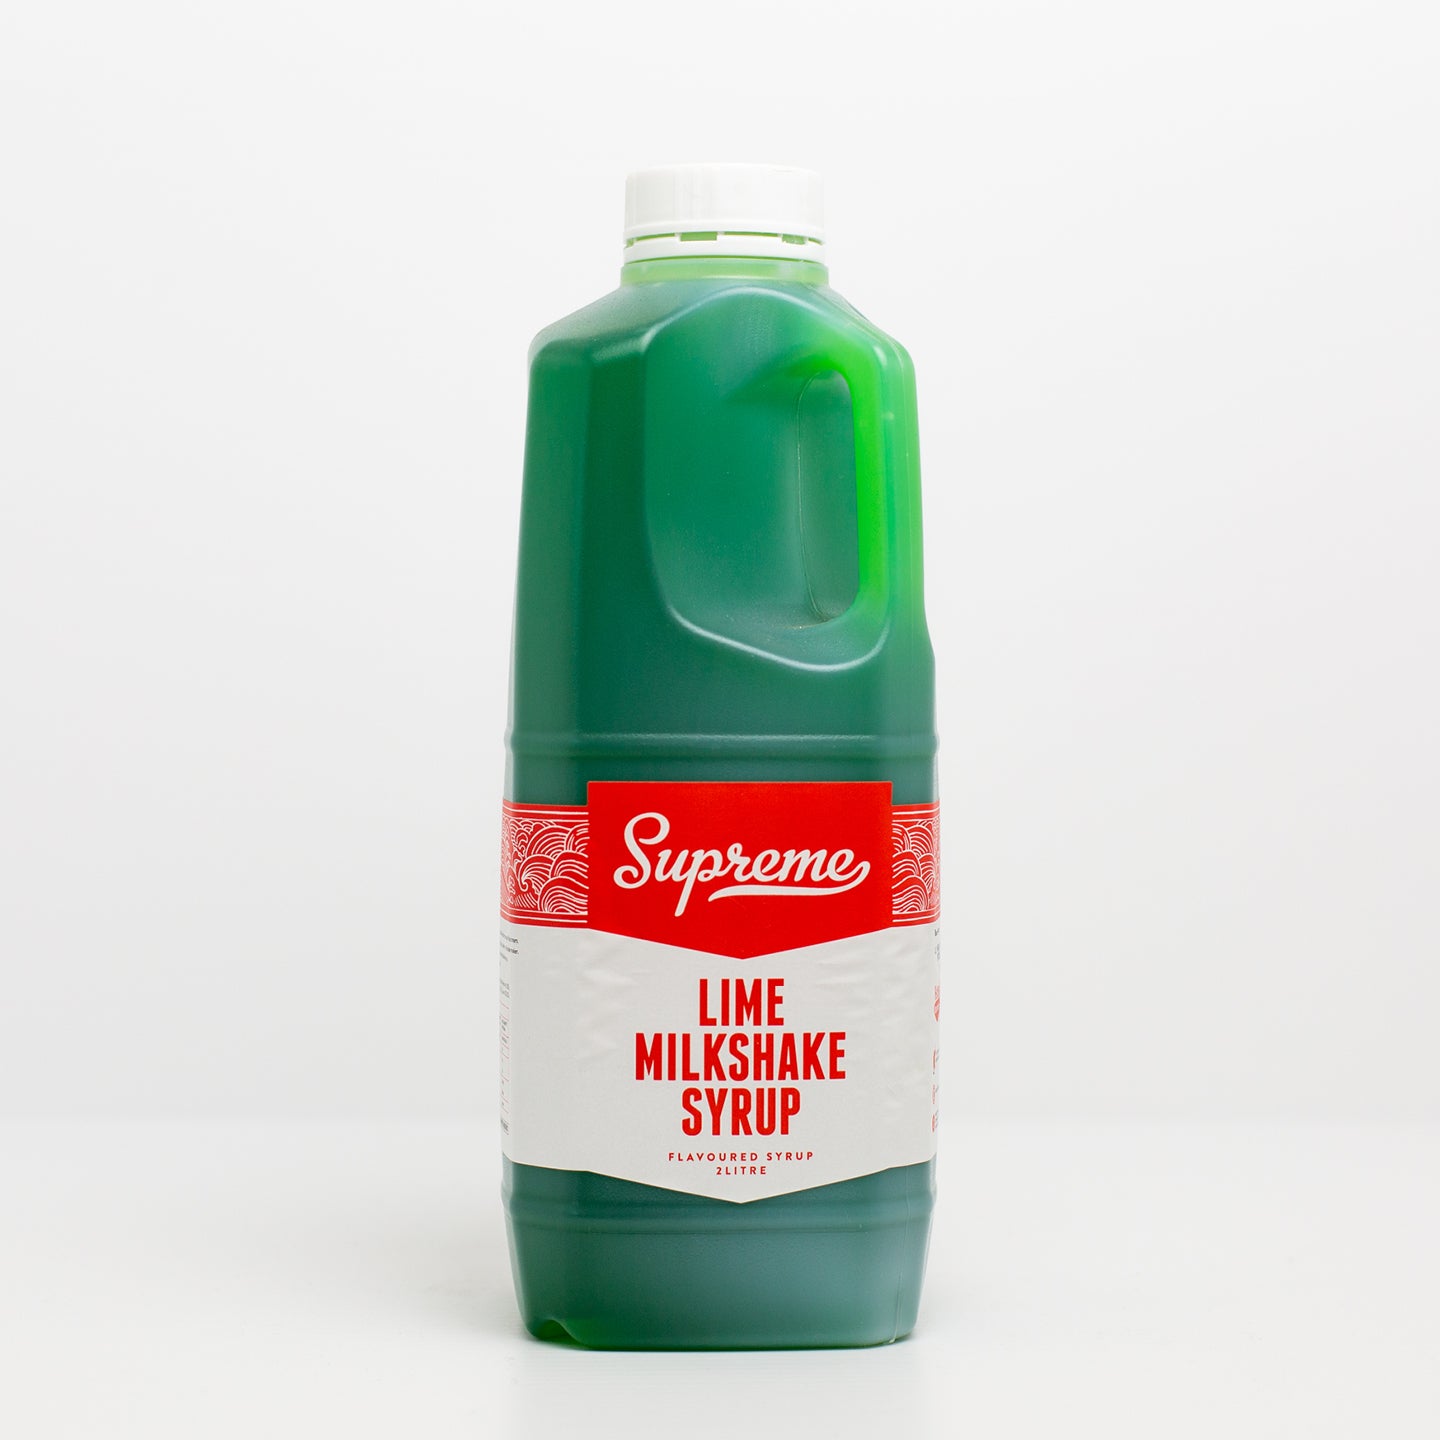 Supreme Milkshake Syrup 2L LIME